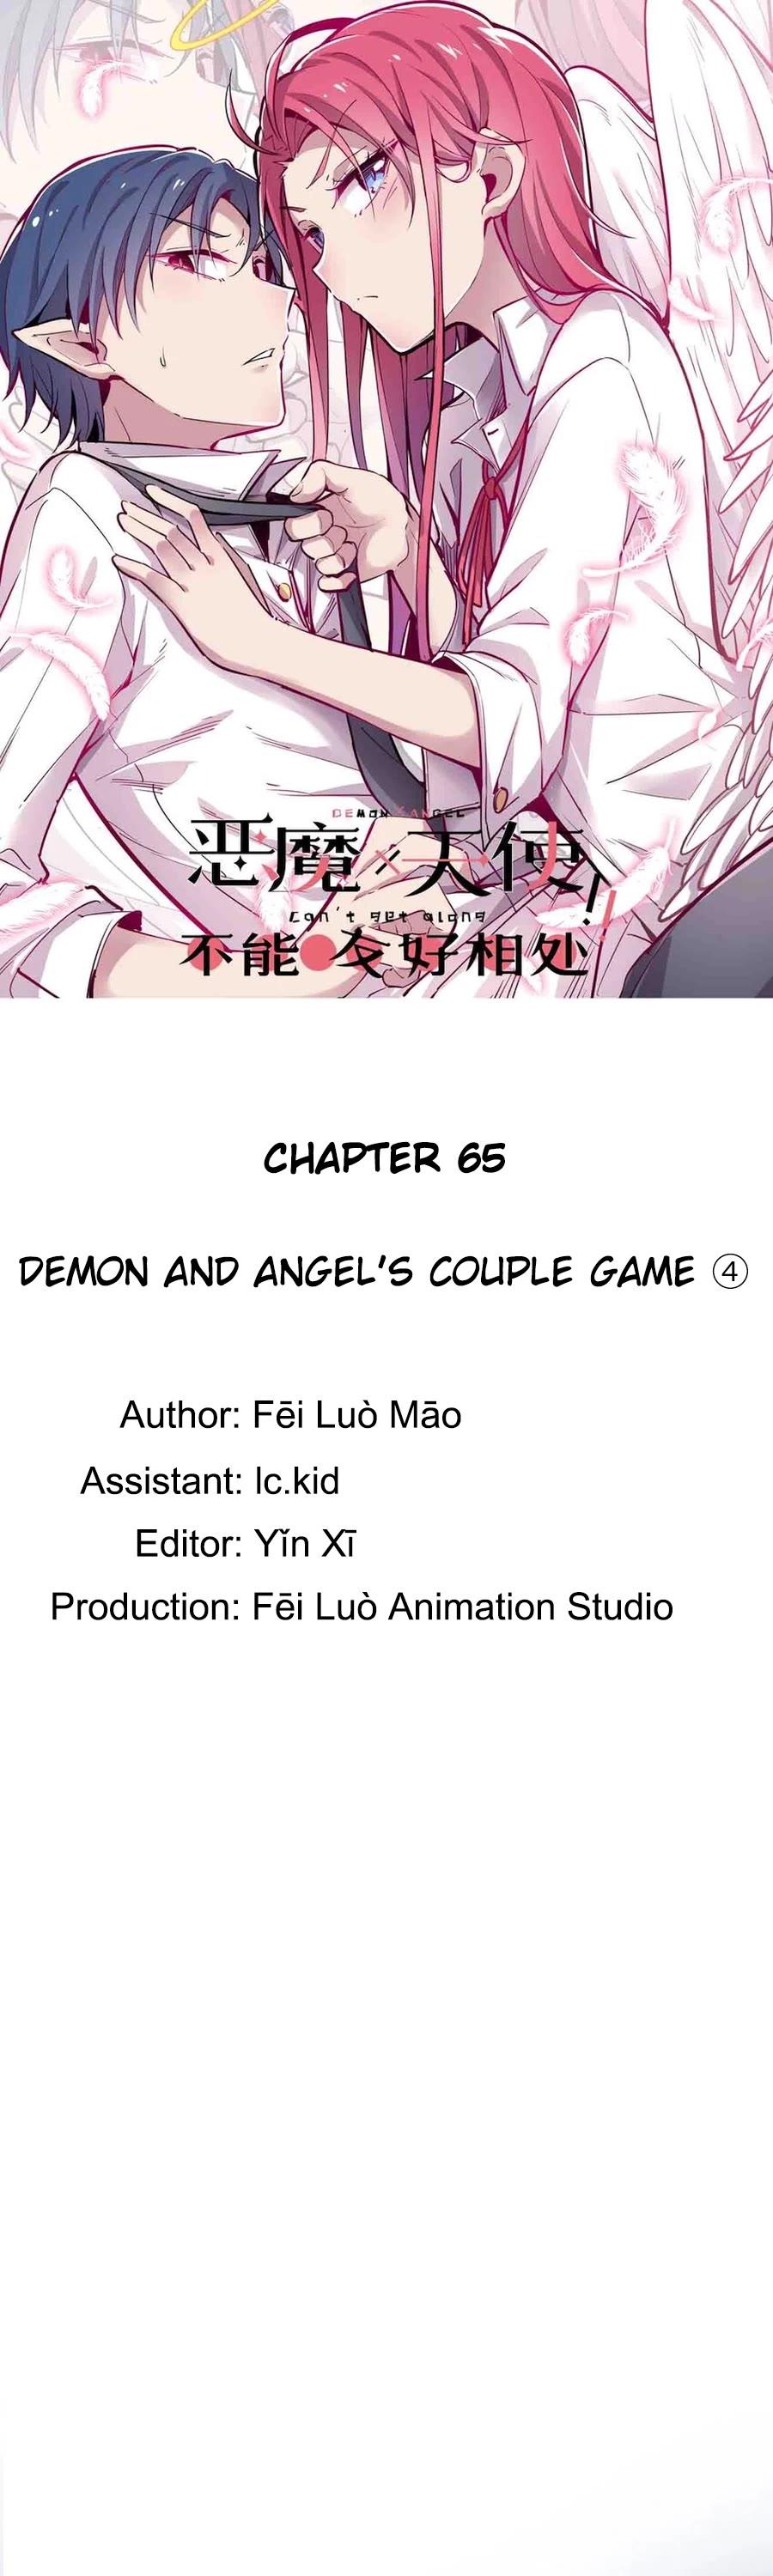 Read Demon X Angel, Can't Get Along! Manga Online Free - Manganelo